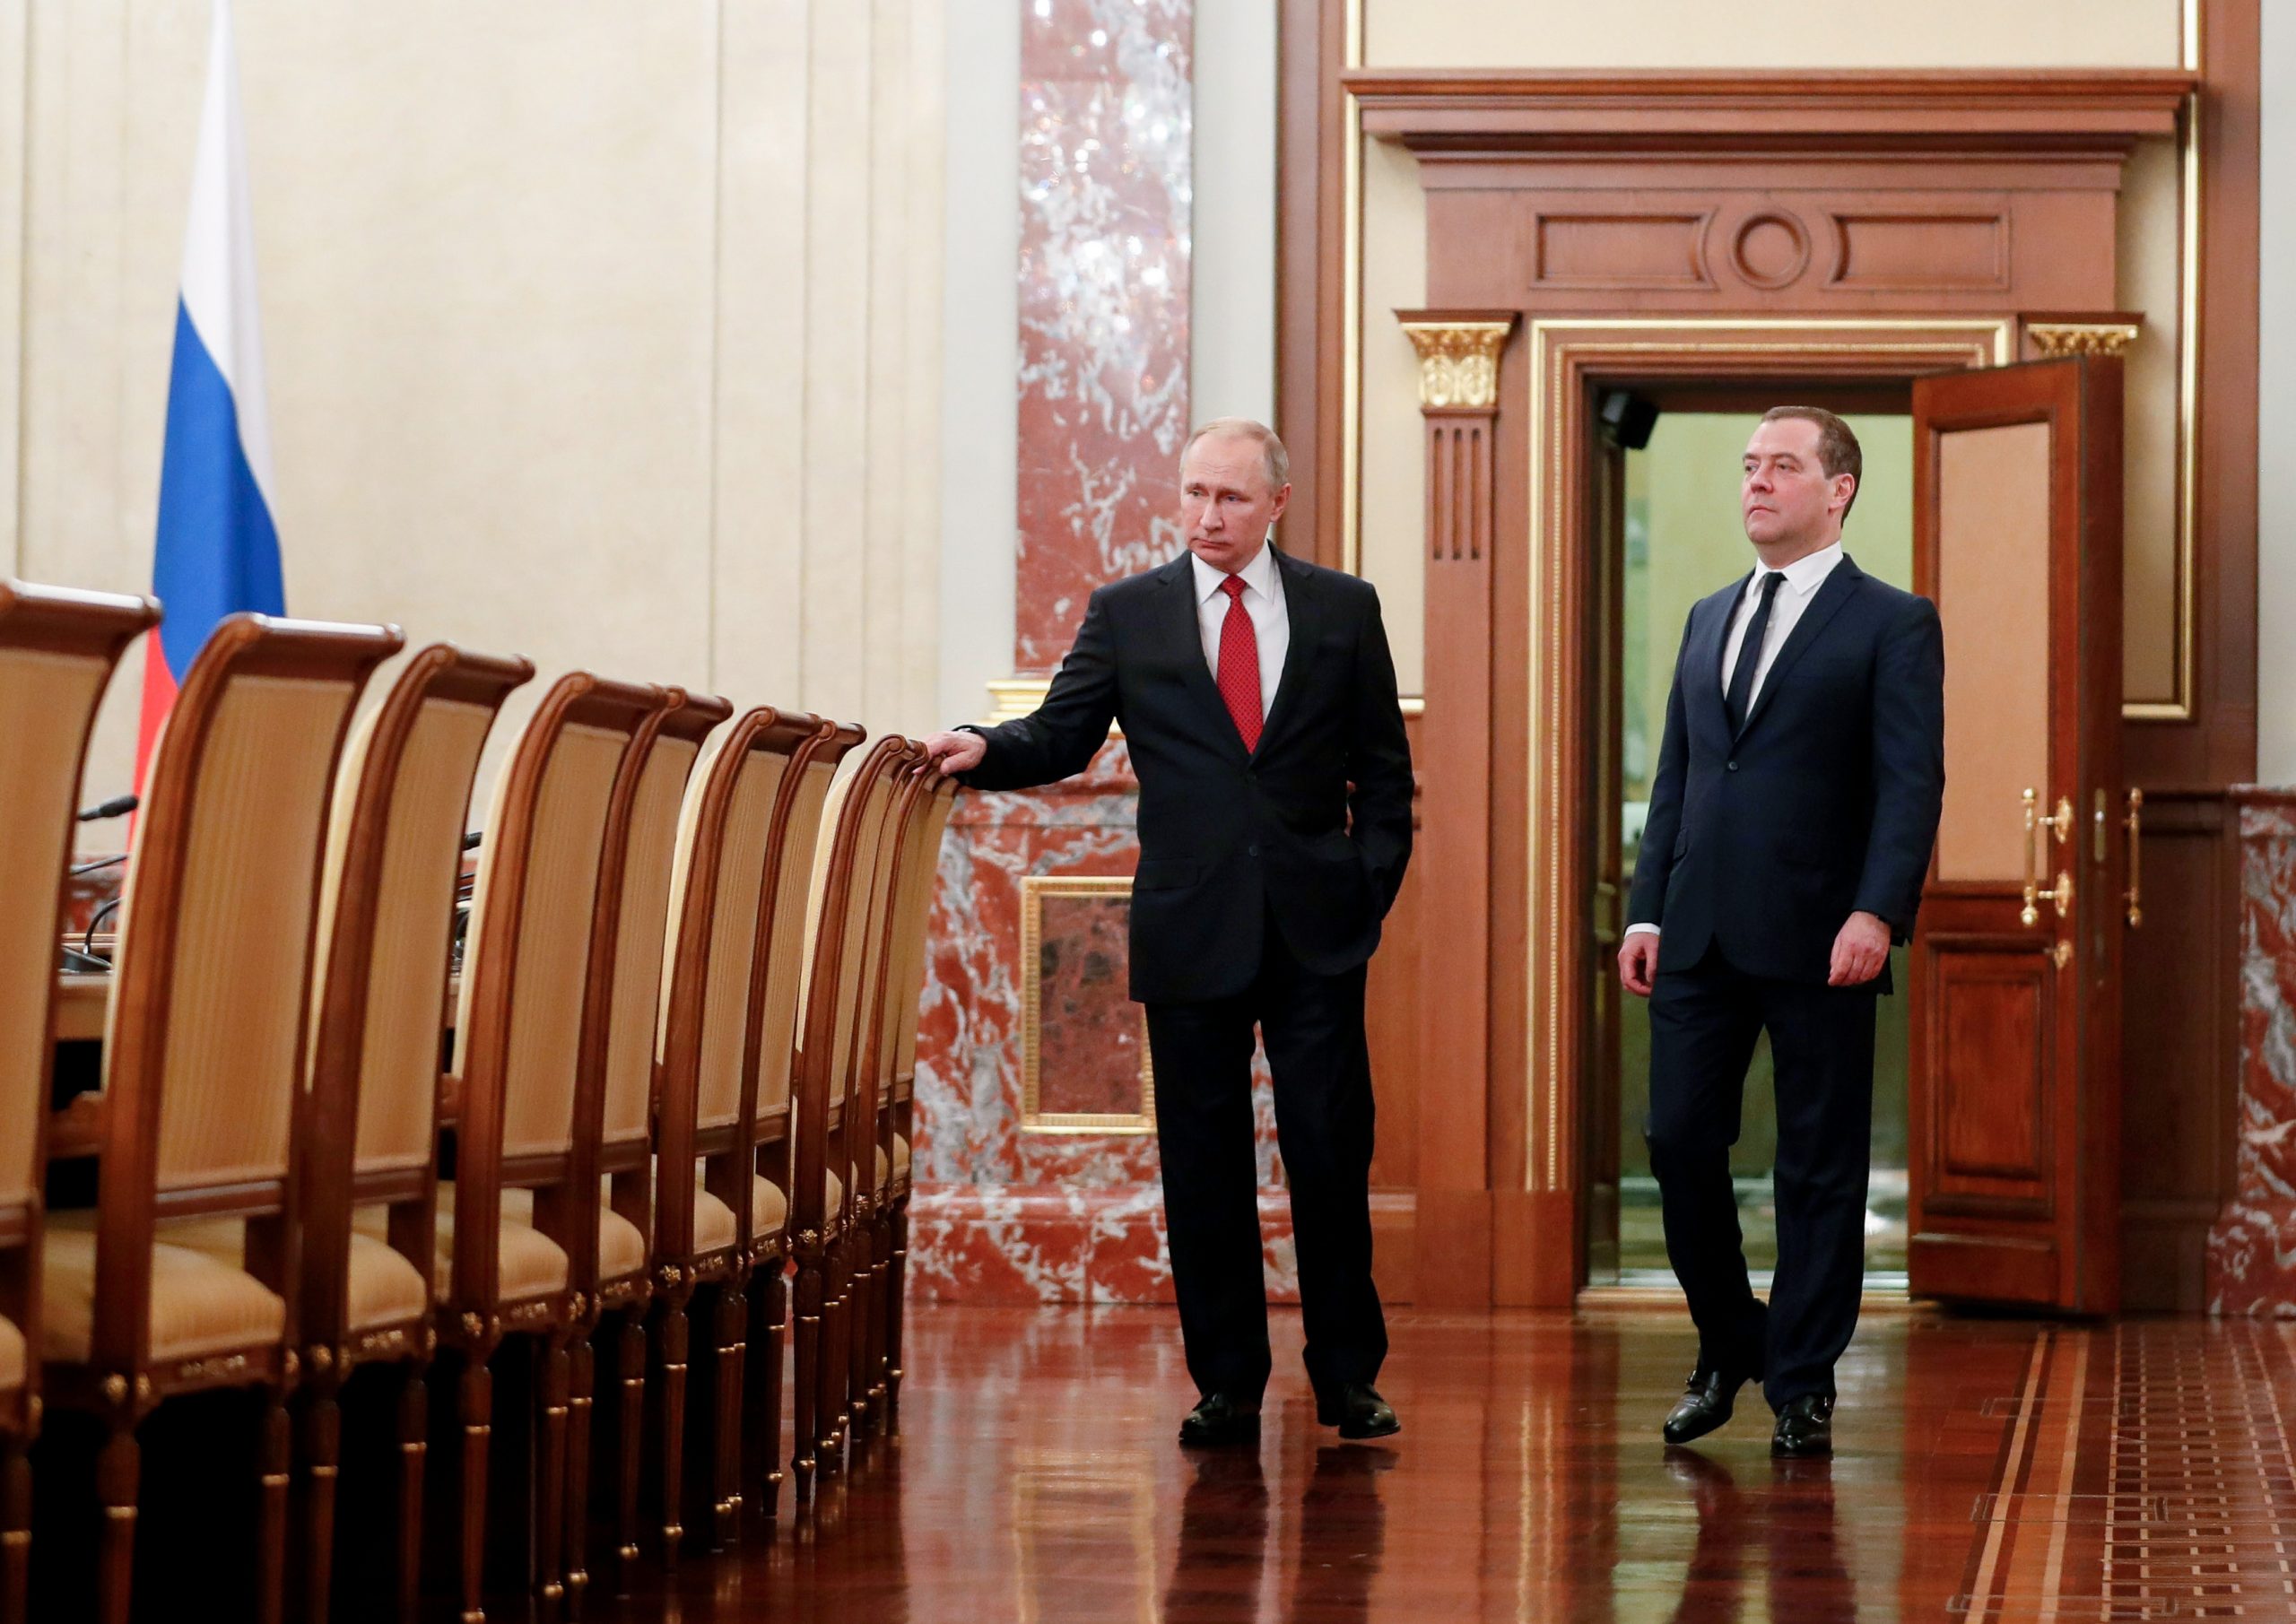 Медведев: Зеленски го чака трибунал или участие във второстепенни комедии